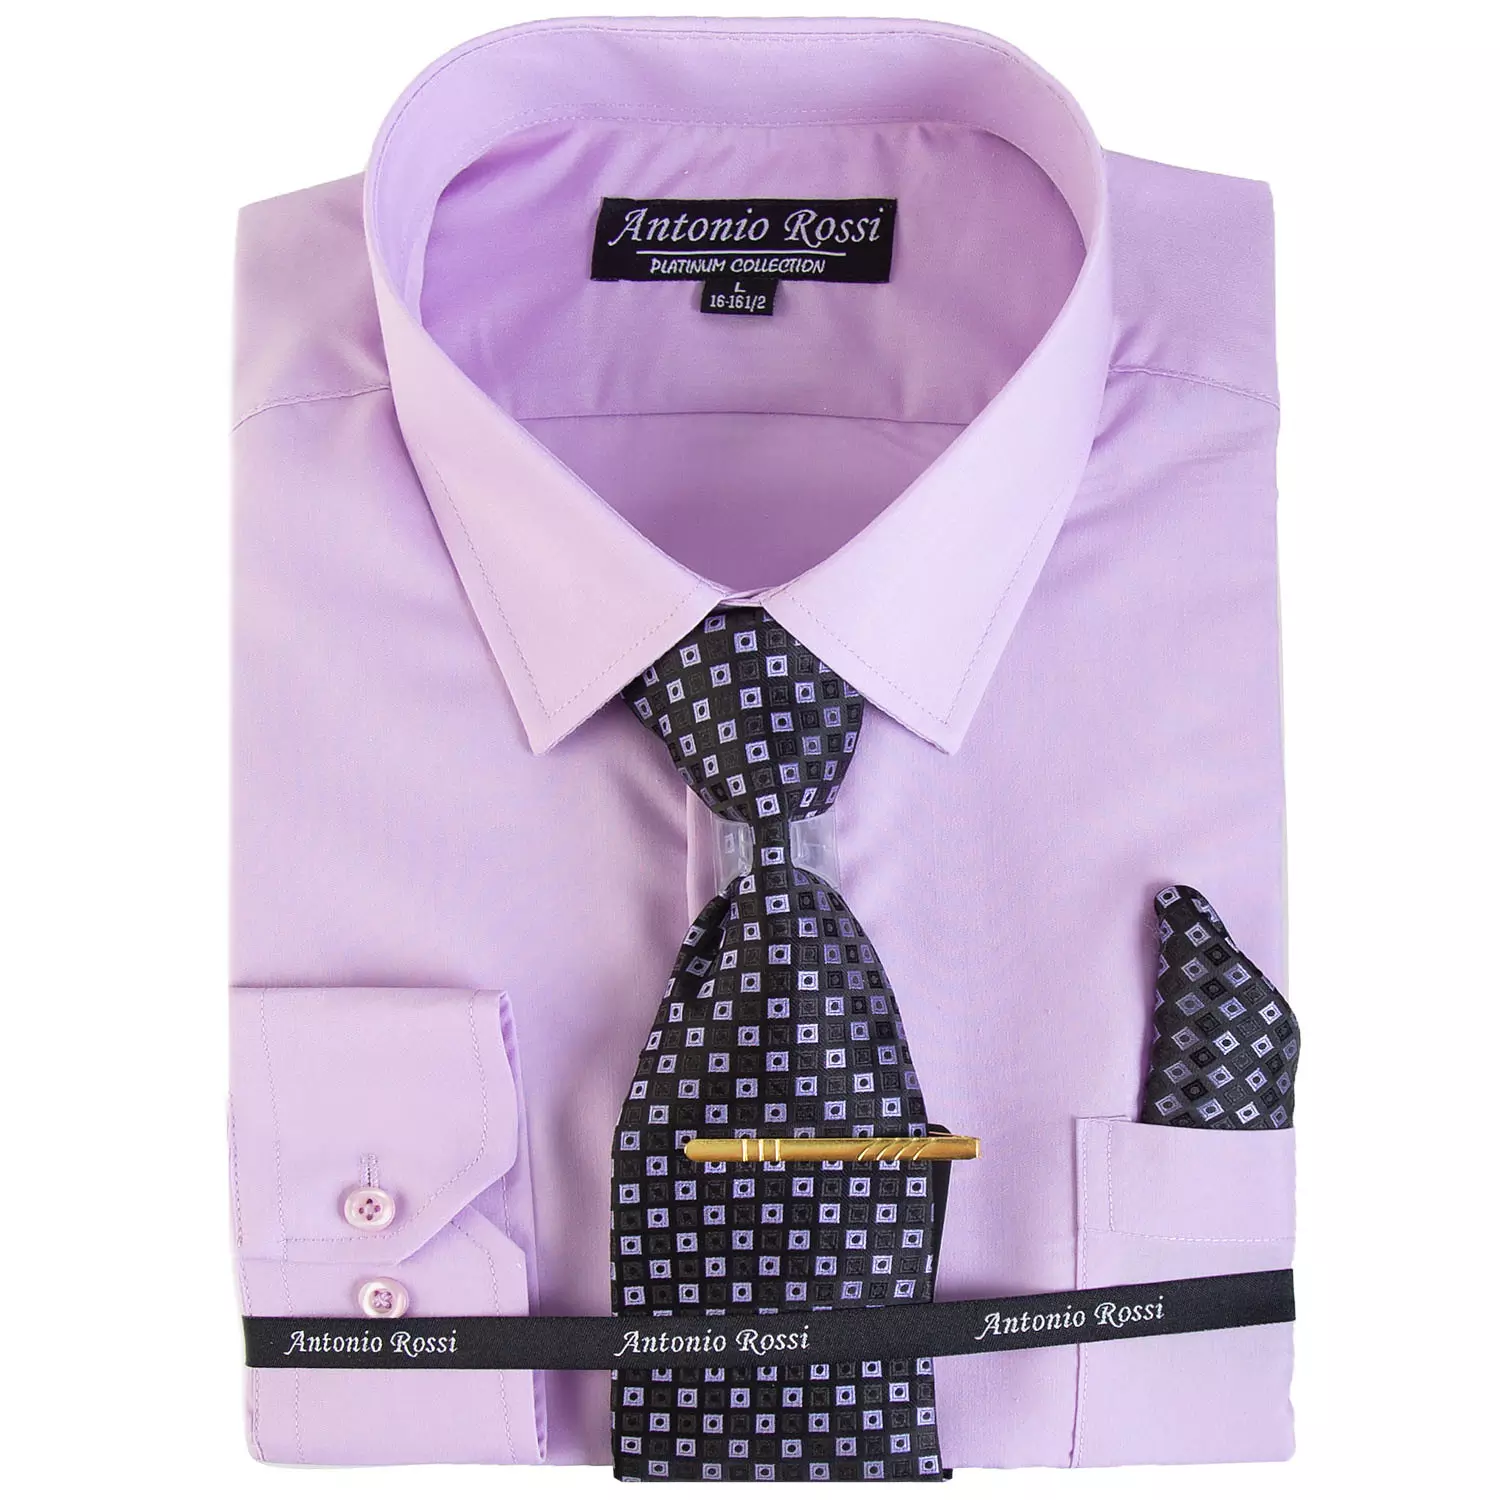 Antonio Rossi - Men's boxed dress shirt with tie, tie clip and hankerchief, lavendar shirt, 16- 16.5